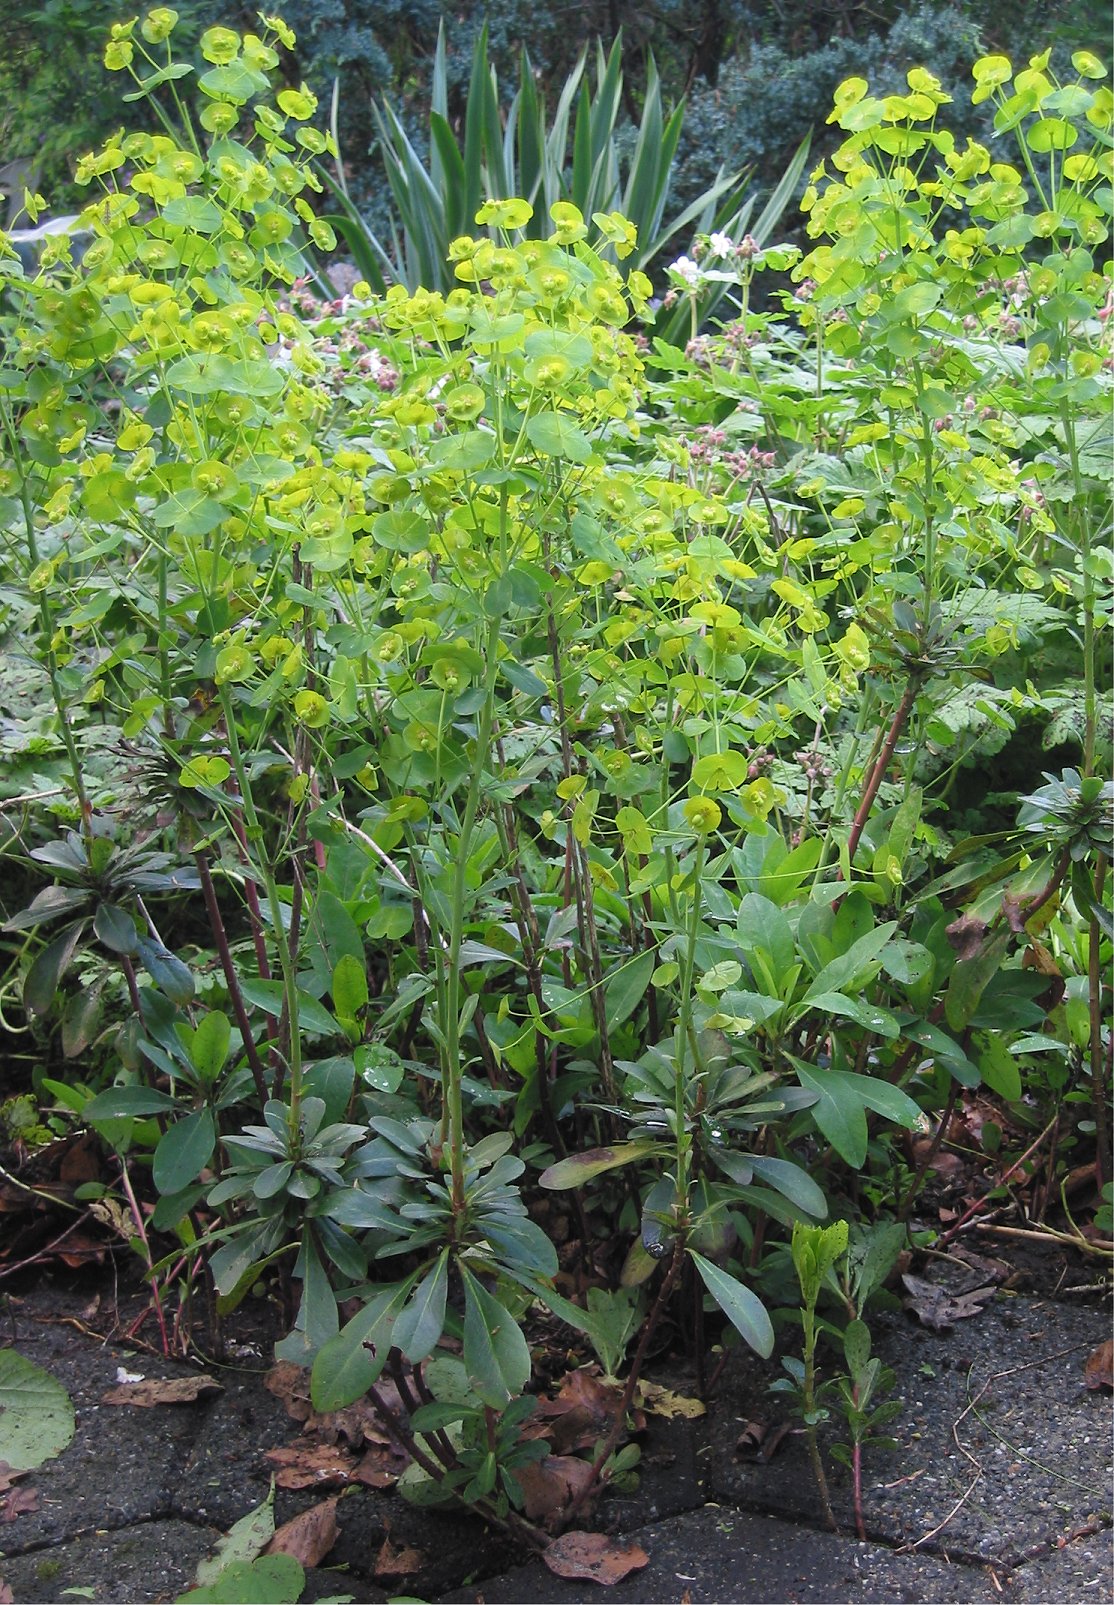 http://upload.wikimedia.org/wikipedia/commons/d/d5/Amandelwolfsmelk_Euphorbia_amygdaloides_plant.jpg